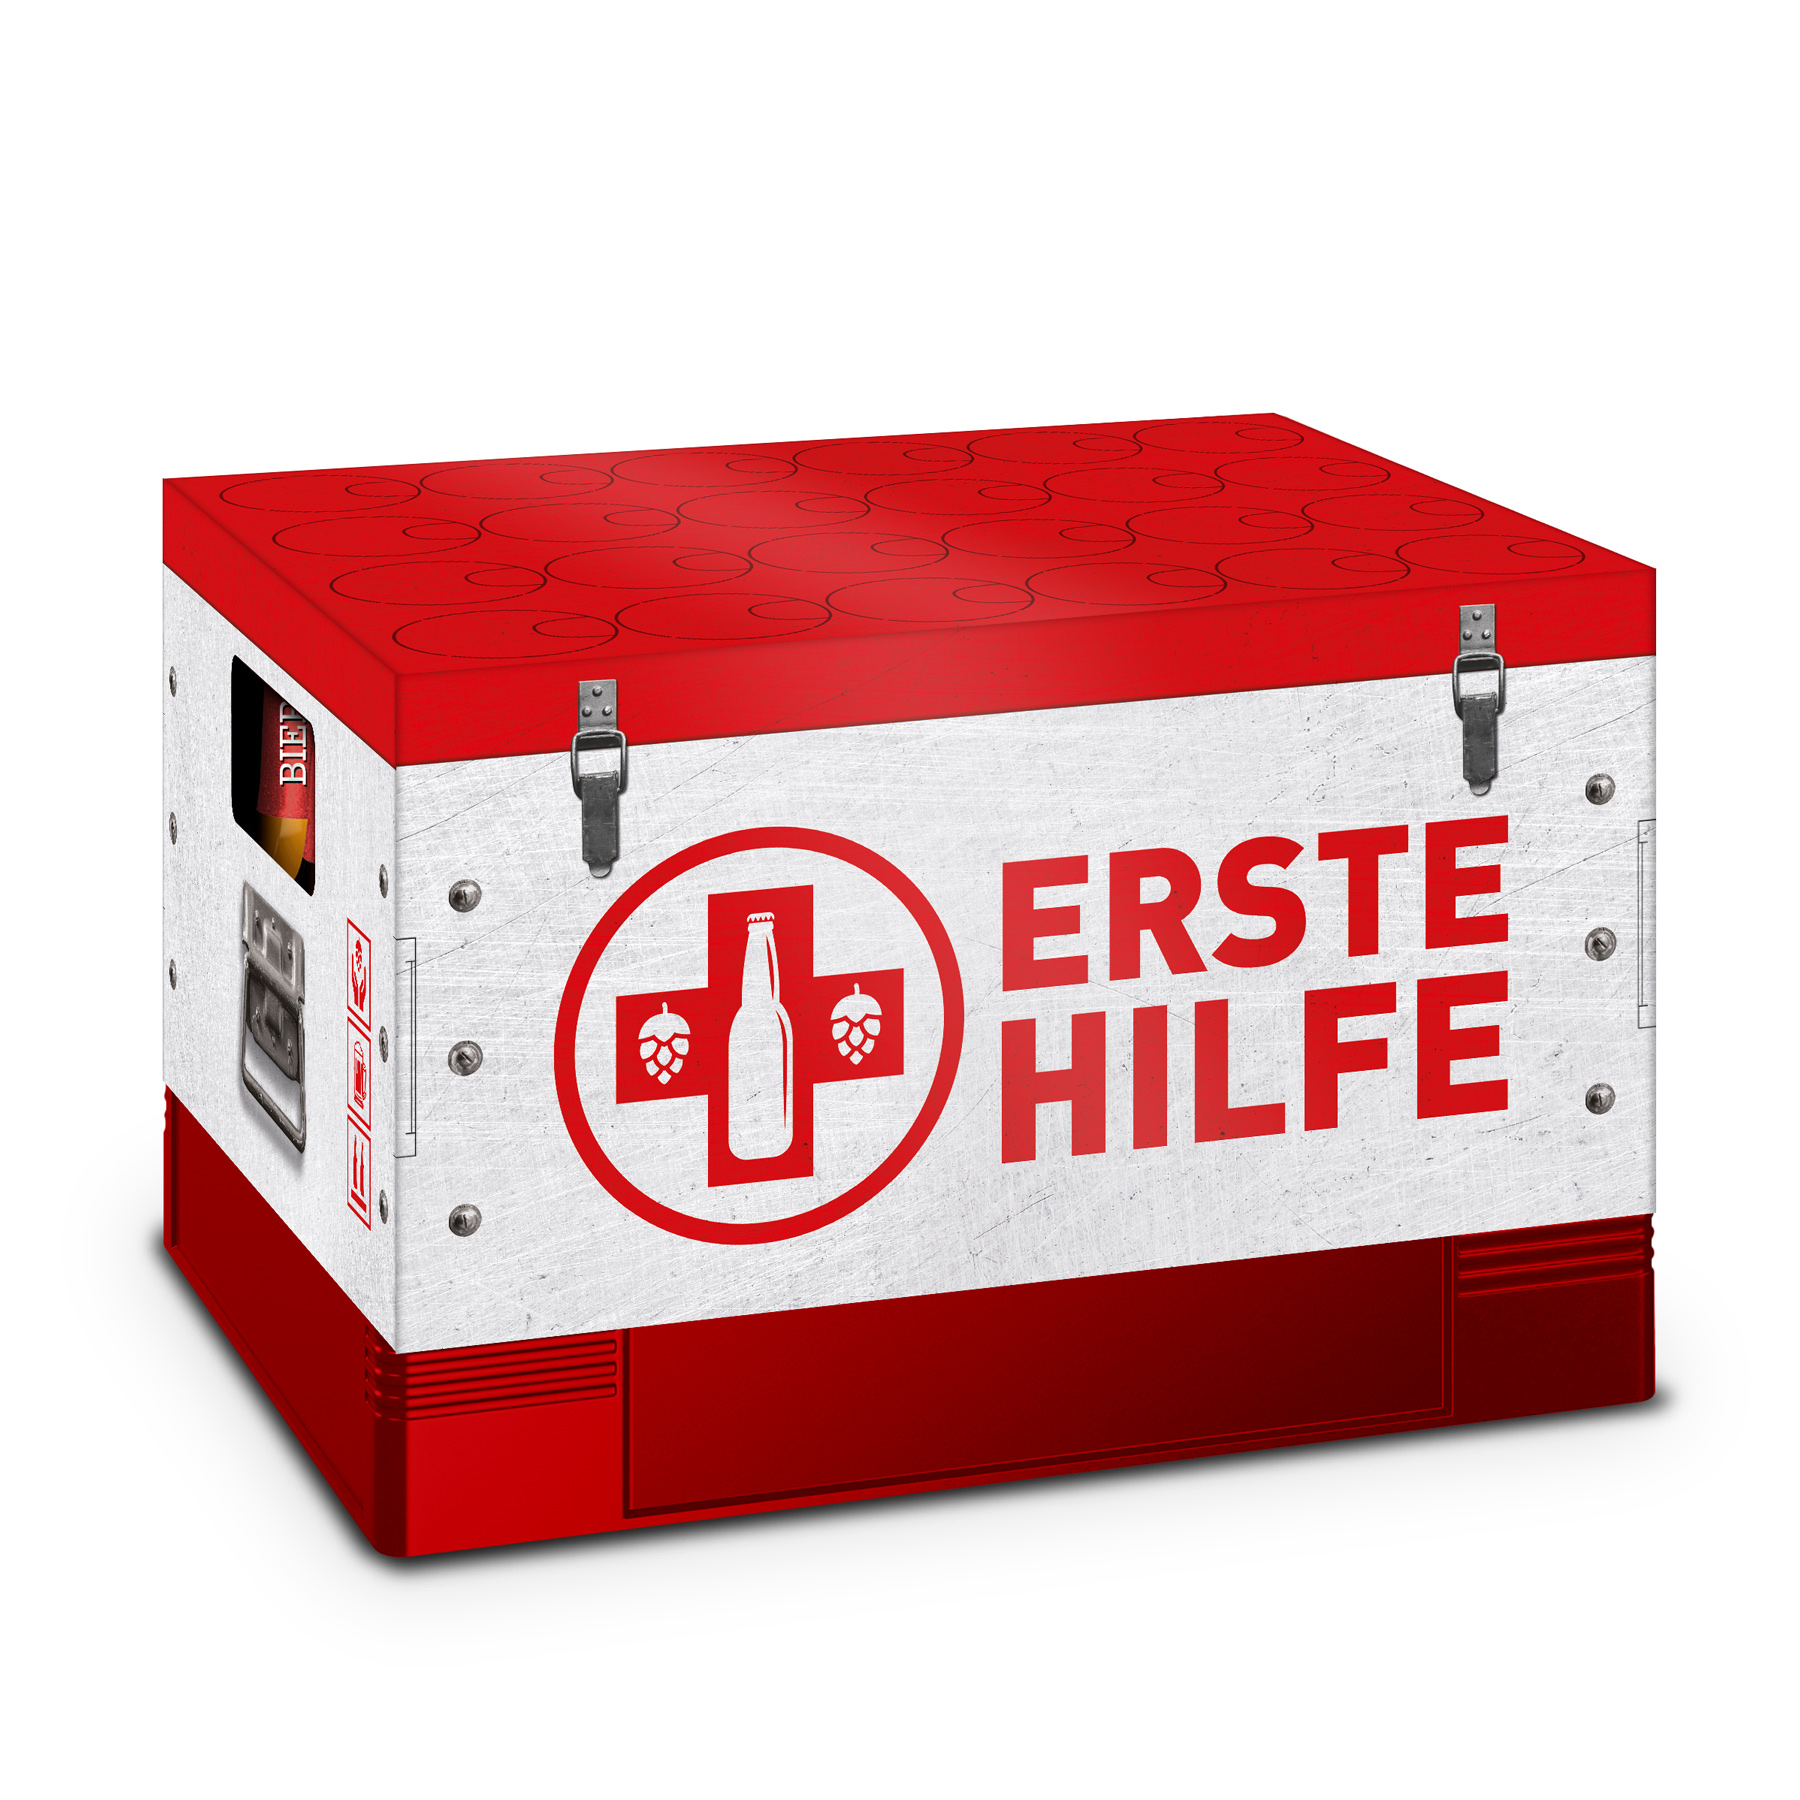 itenga Bierkasten Geschenkverpackung Motiv Erste Hilfe -...